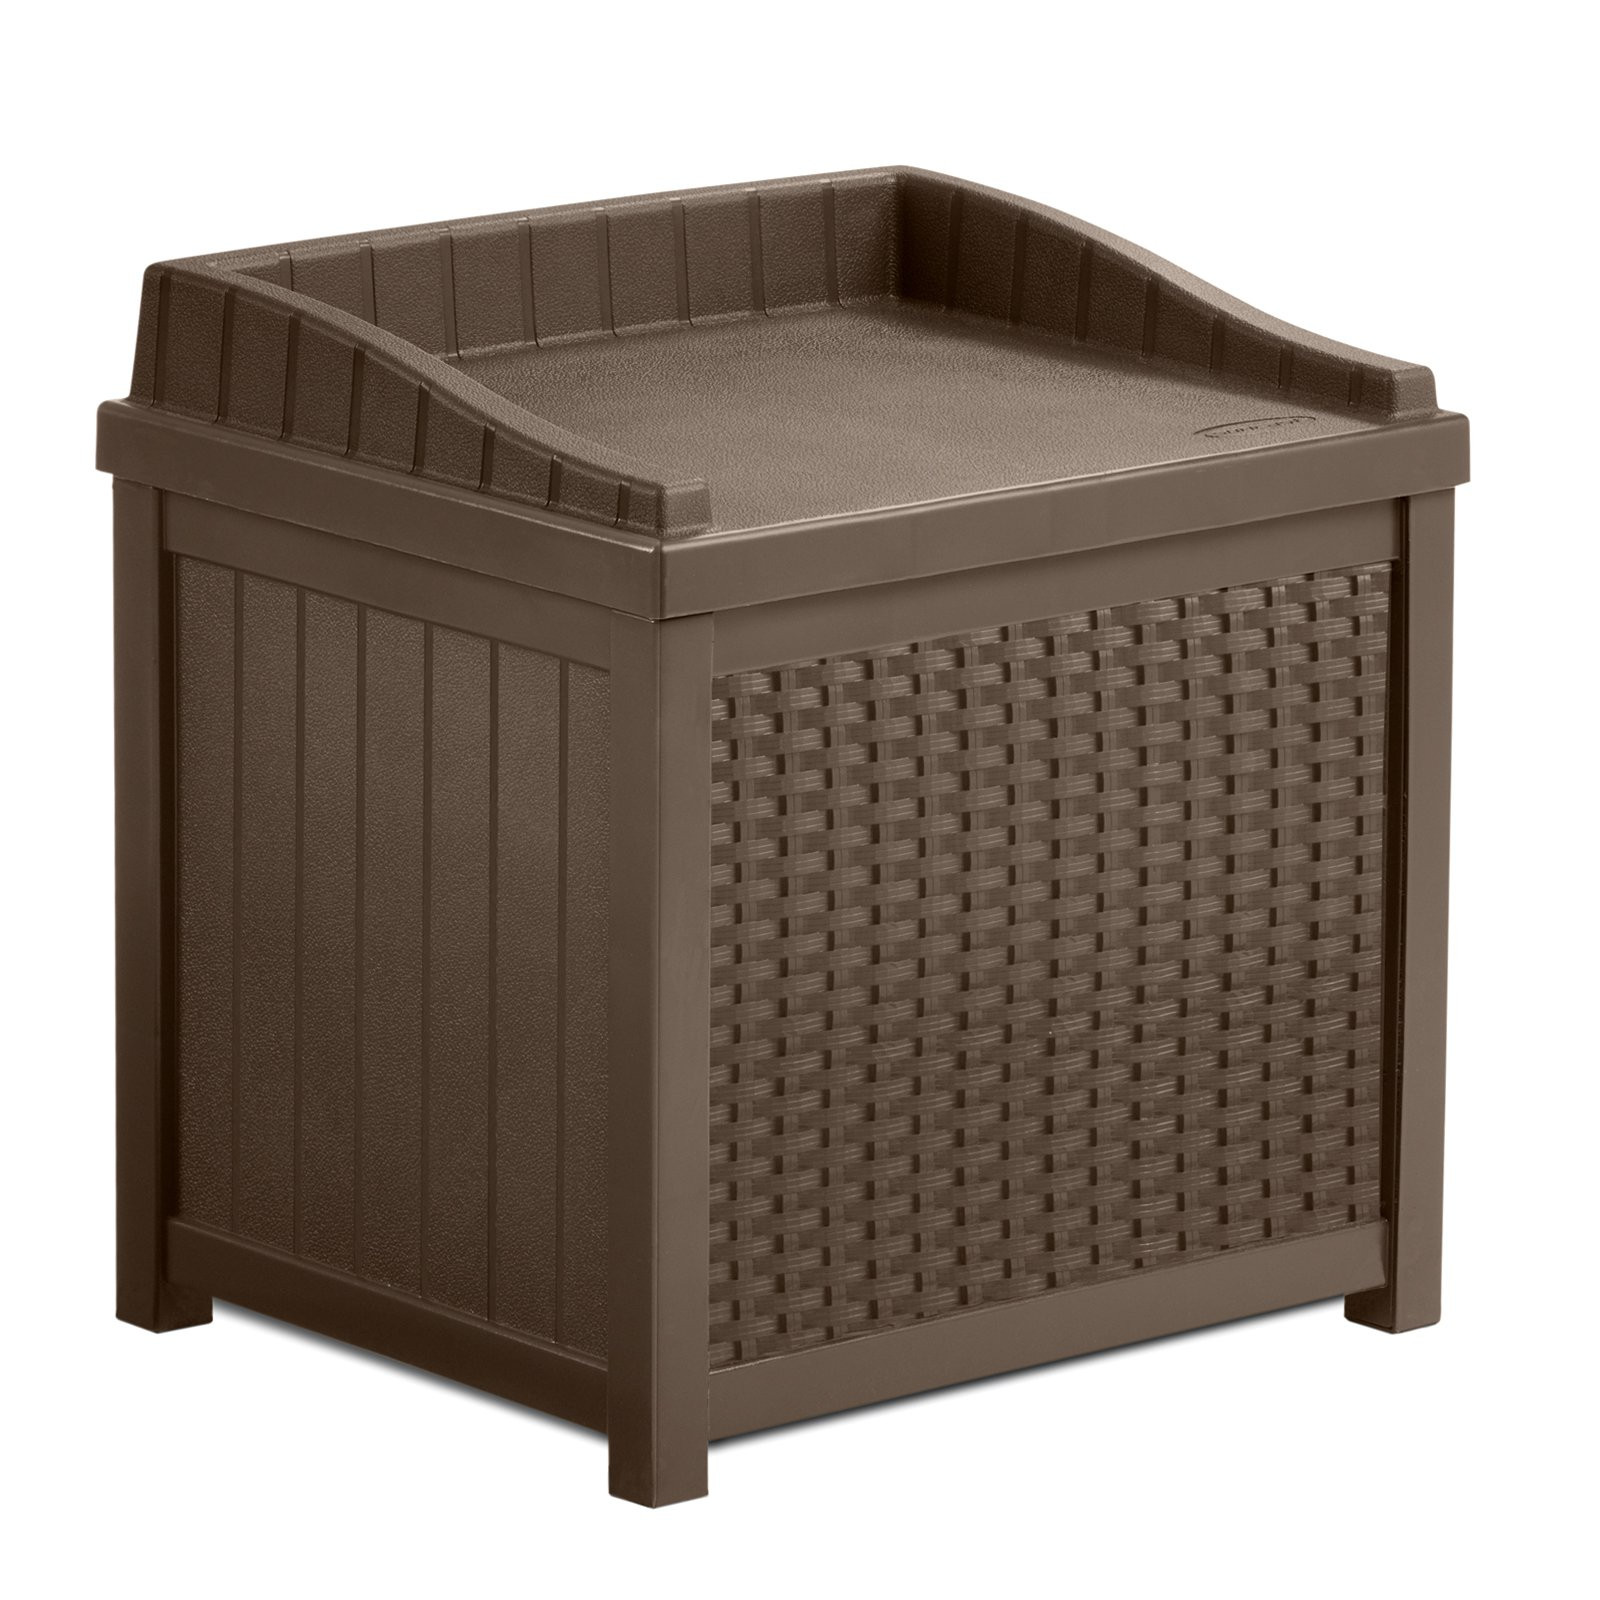 Suncast Outdoor Storage Bench
 Suncast Resin 22 Gallon Outdoor Storage Bench Seat